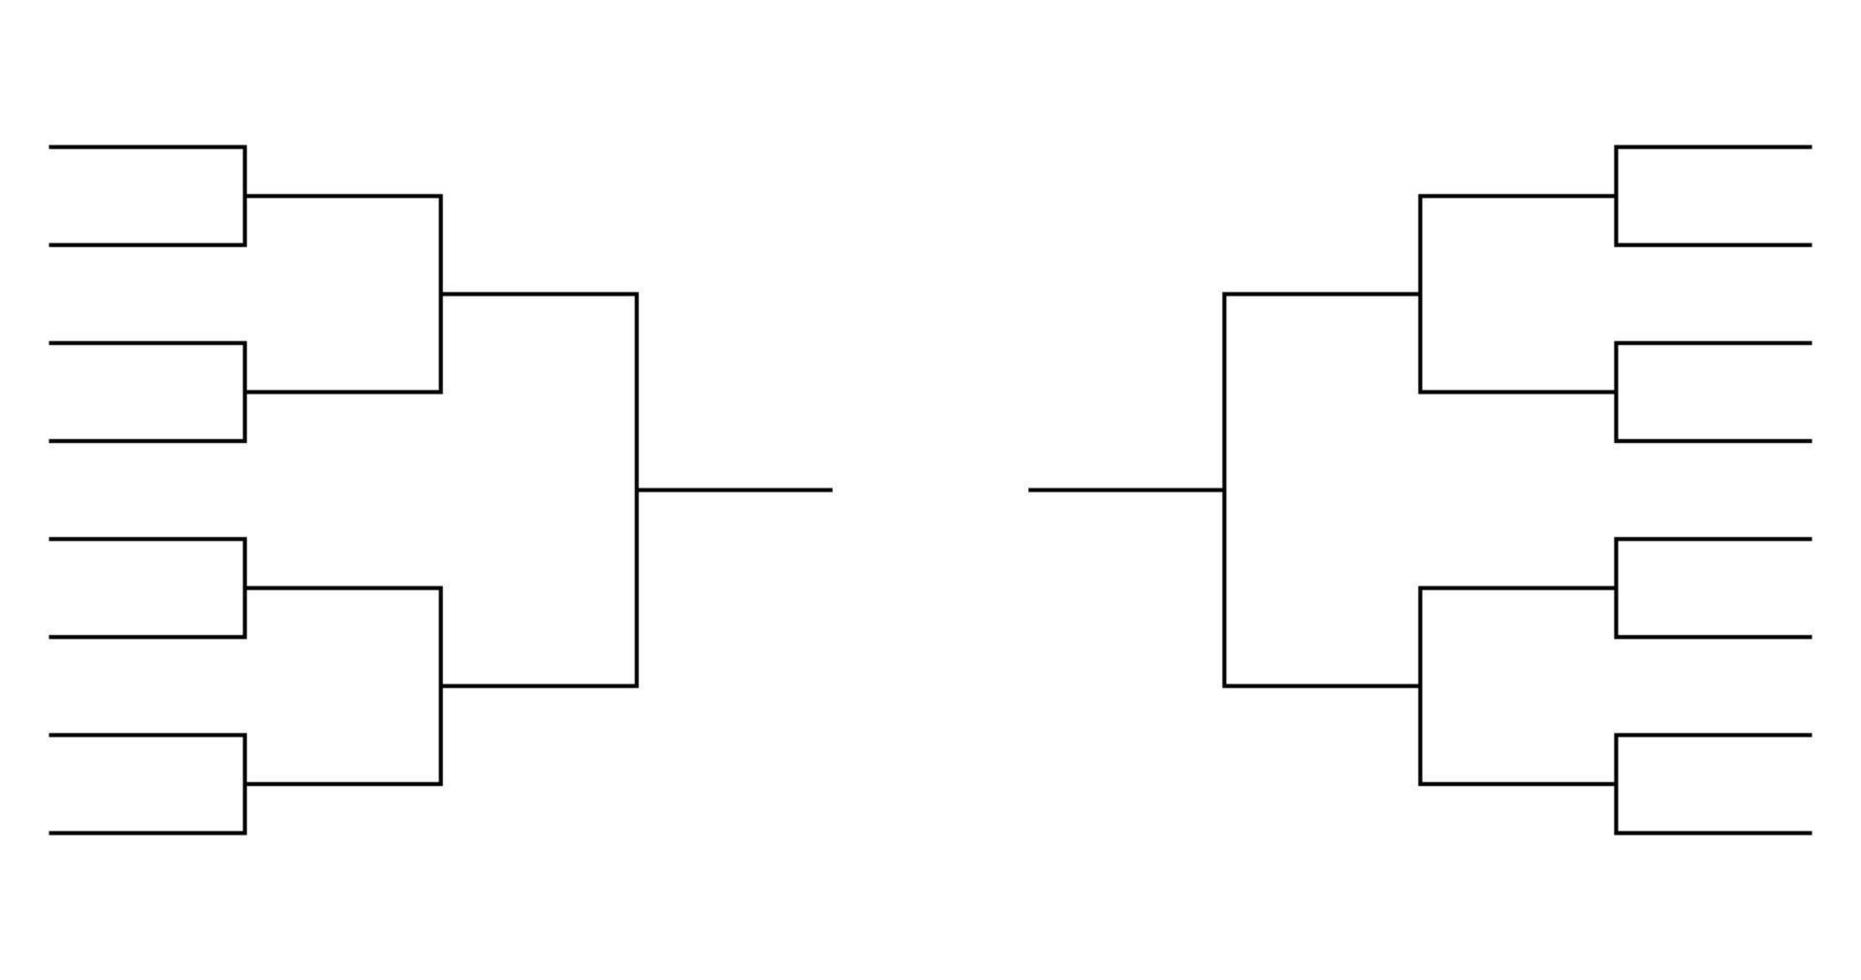 Tournament bracket templates . Vector illustration